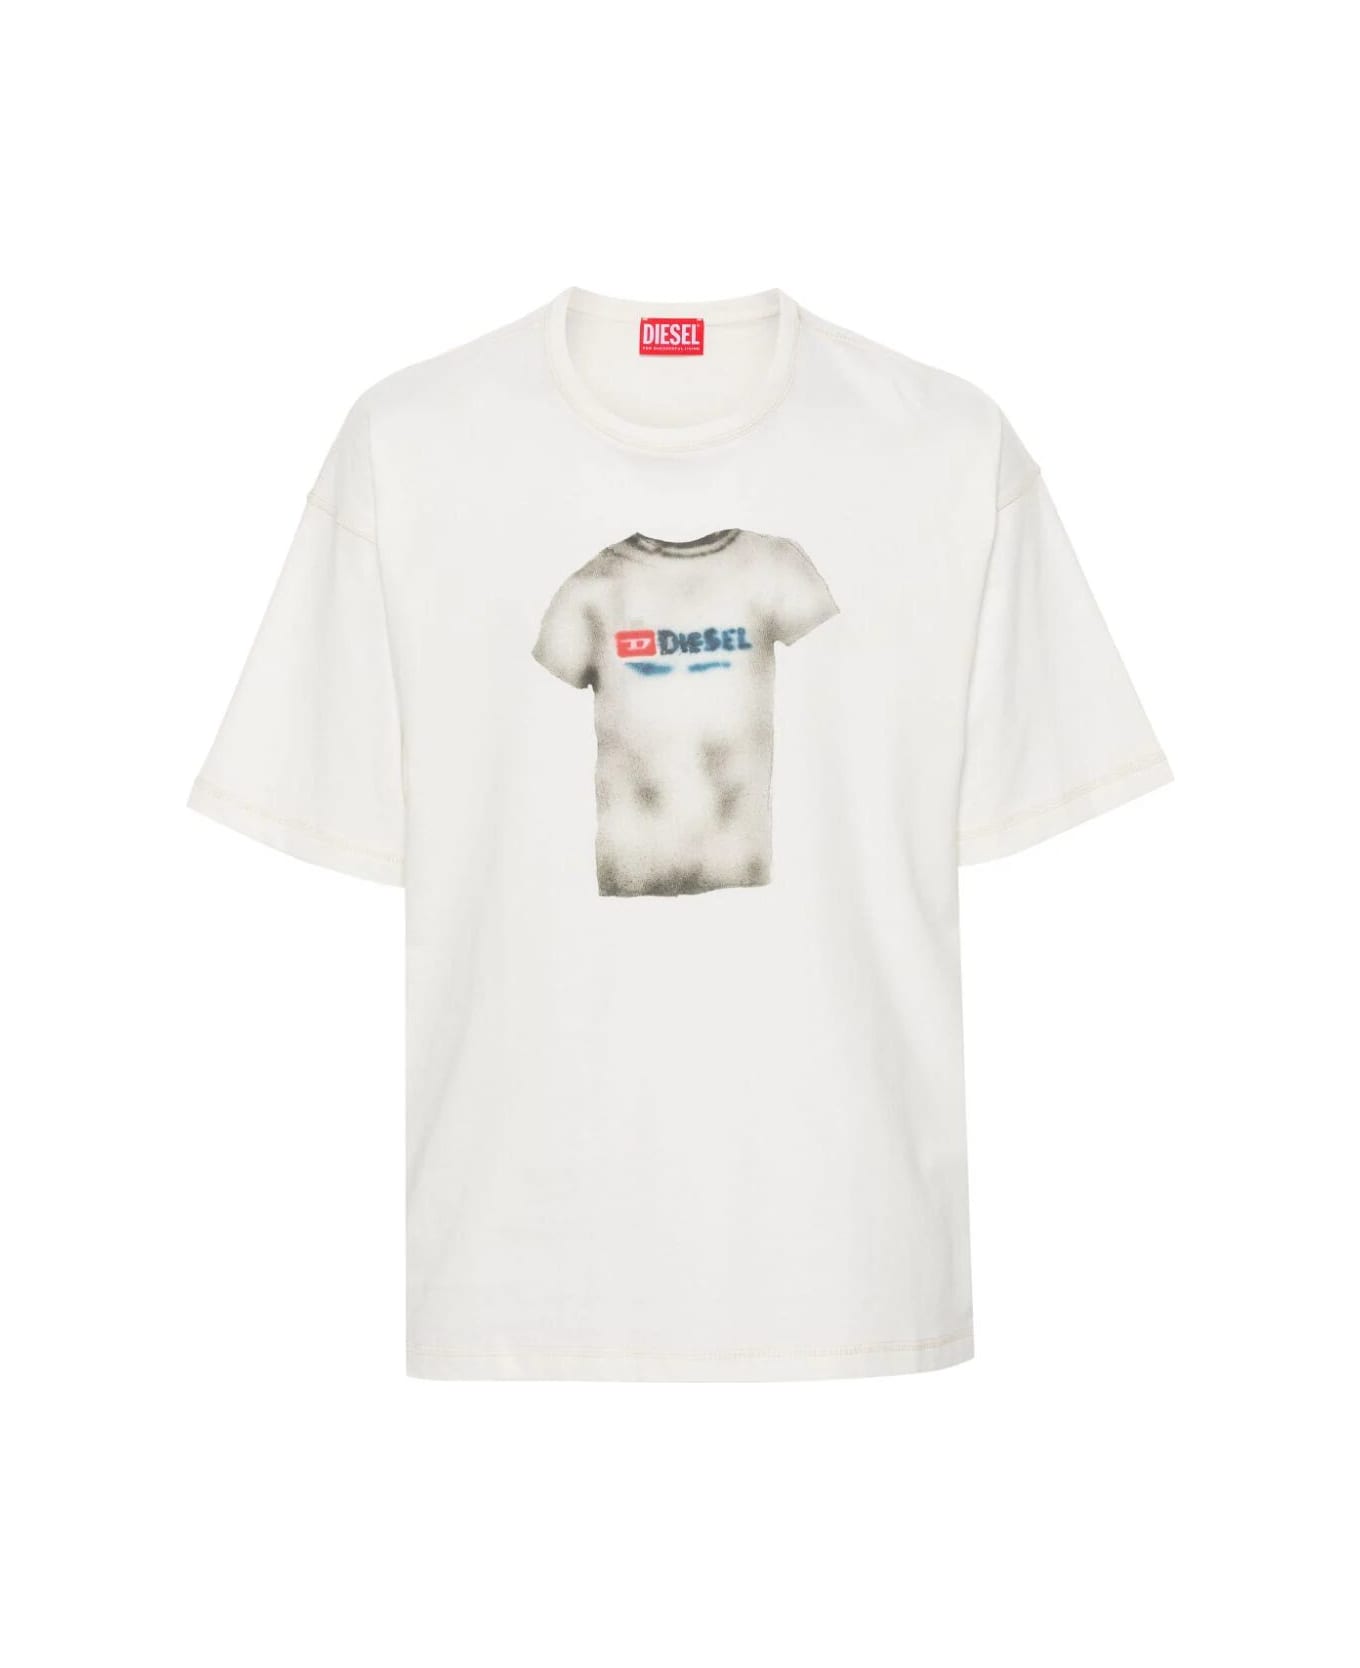 Diesel Boxt T-shirt - Cream